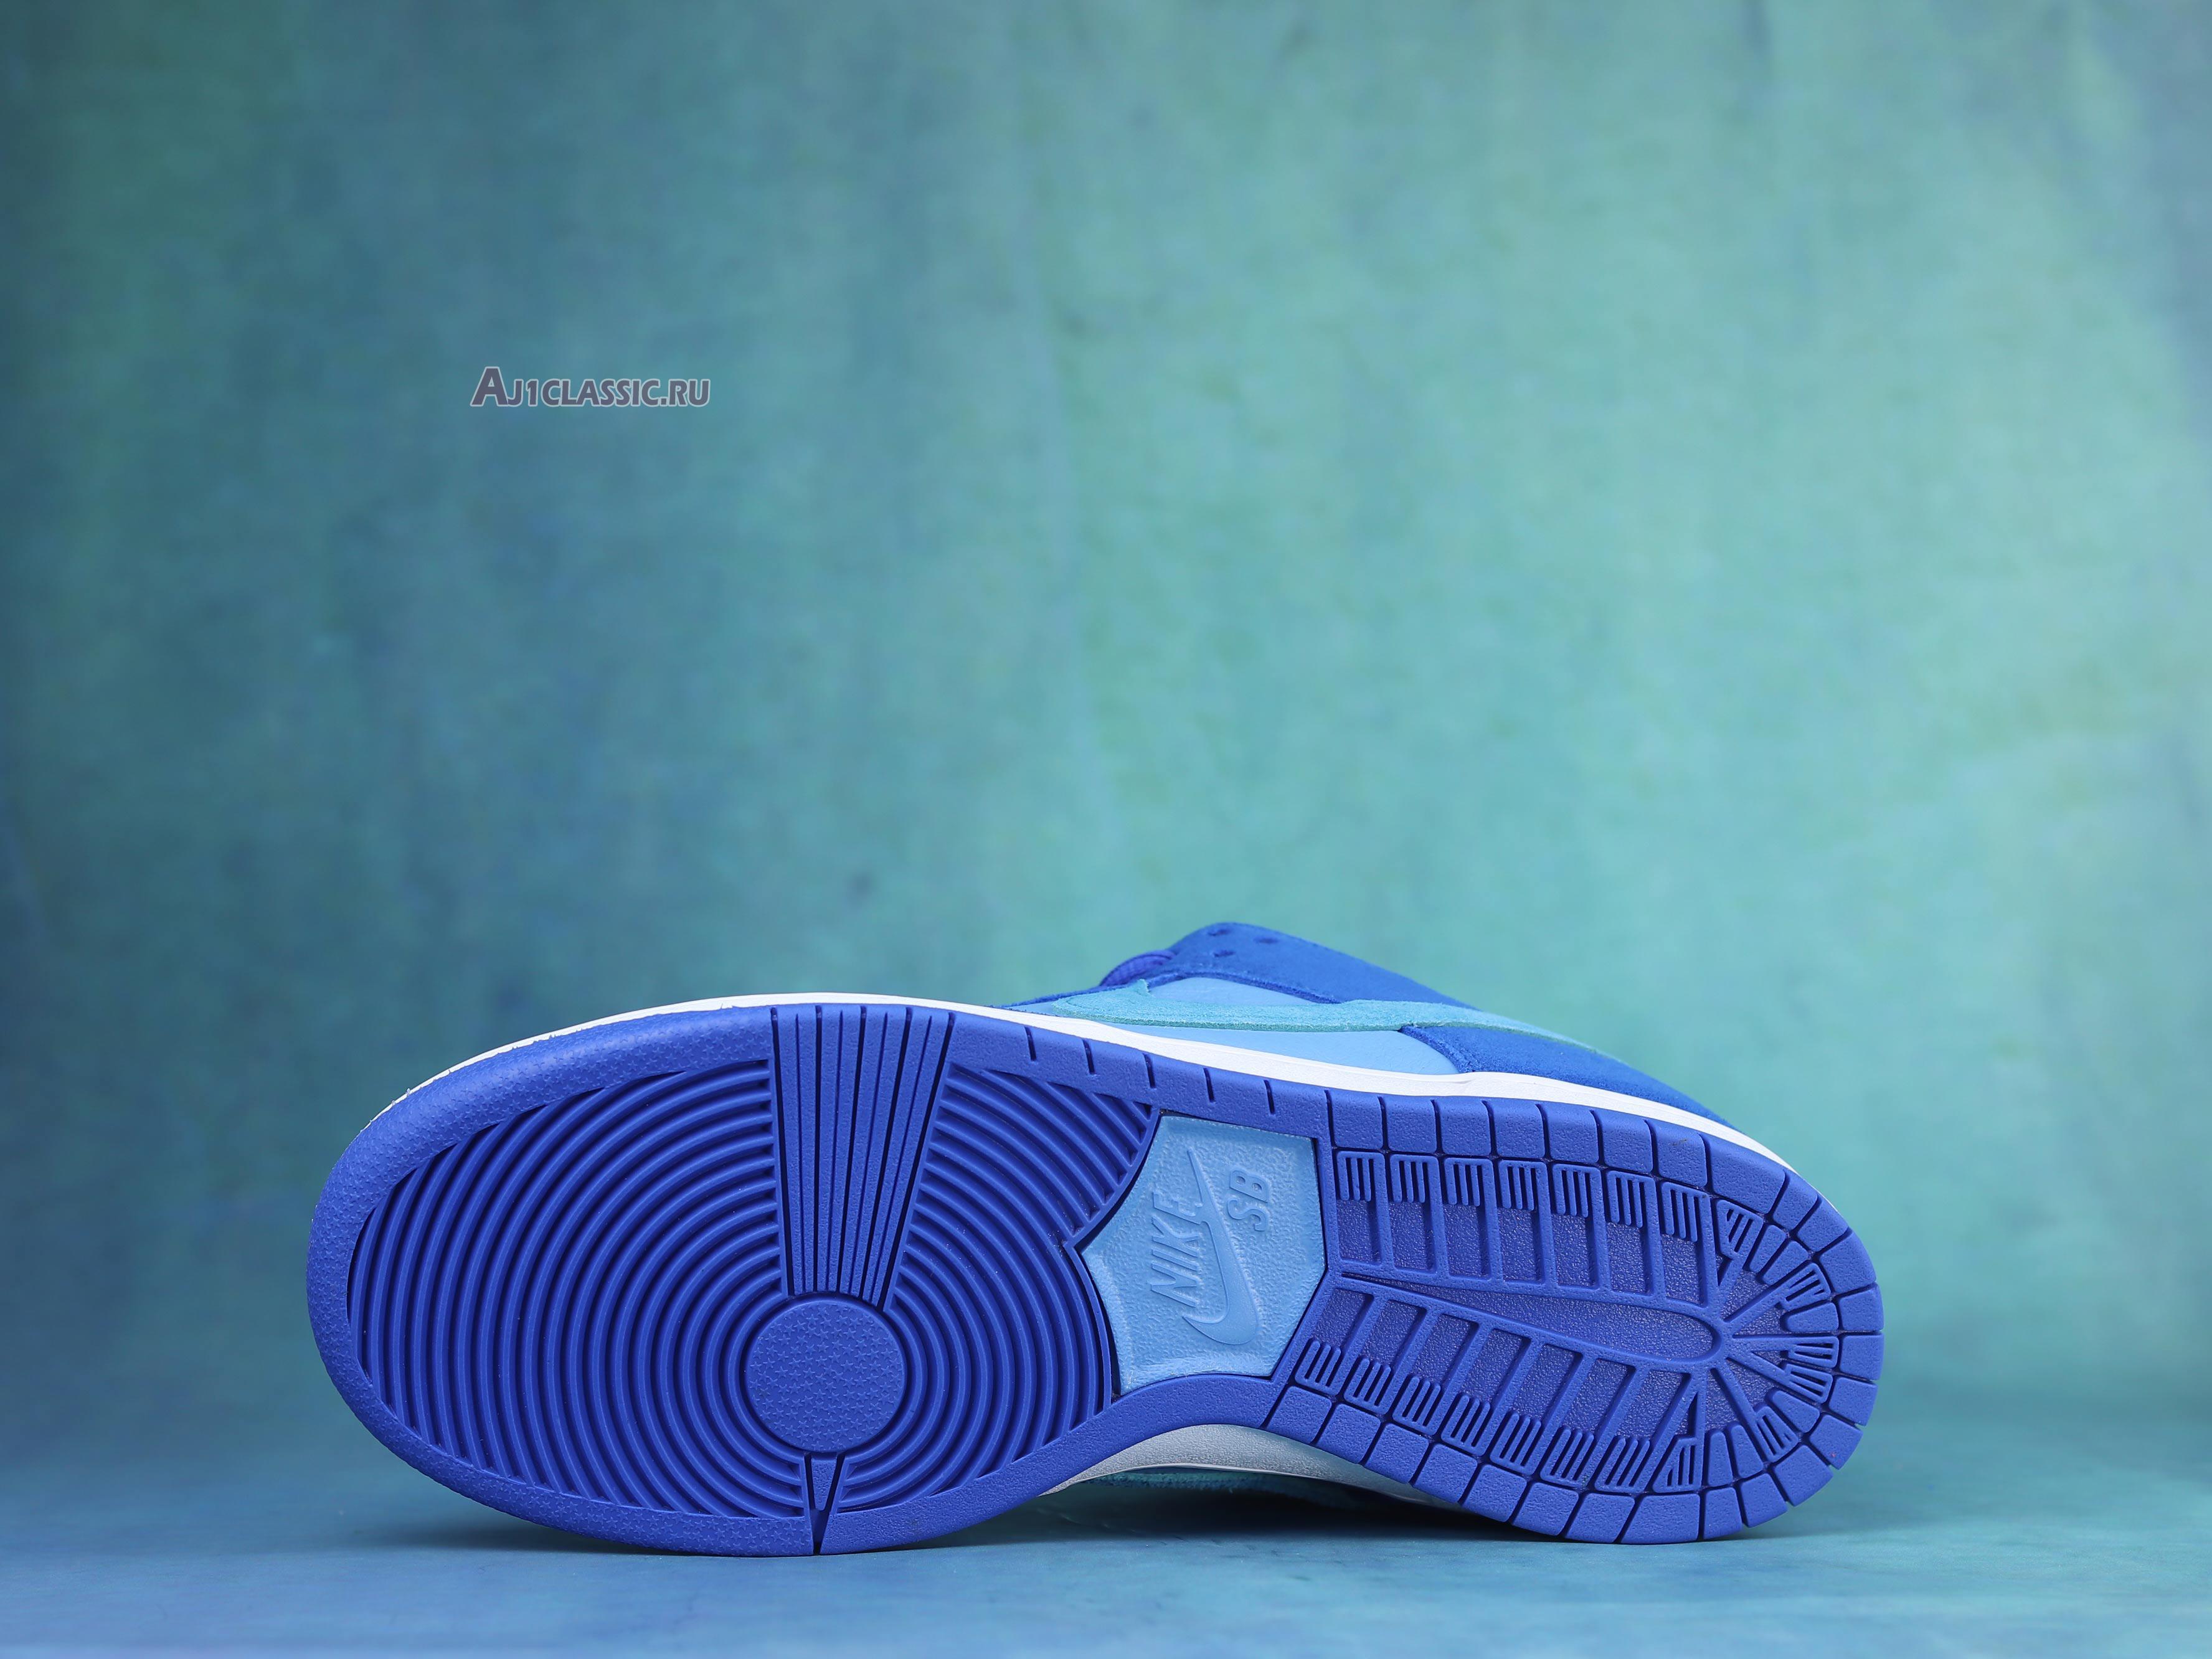 Nike SB Dunk Low "Blue Raspberry" DM0807-400